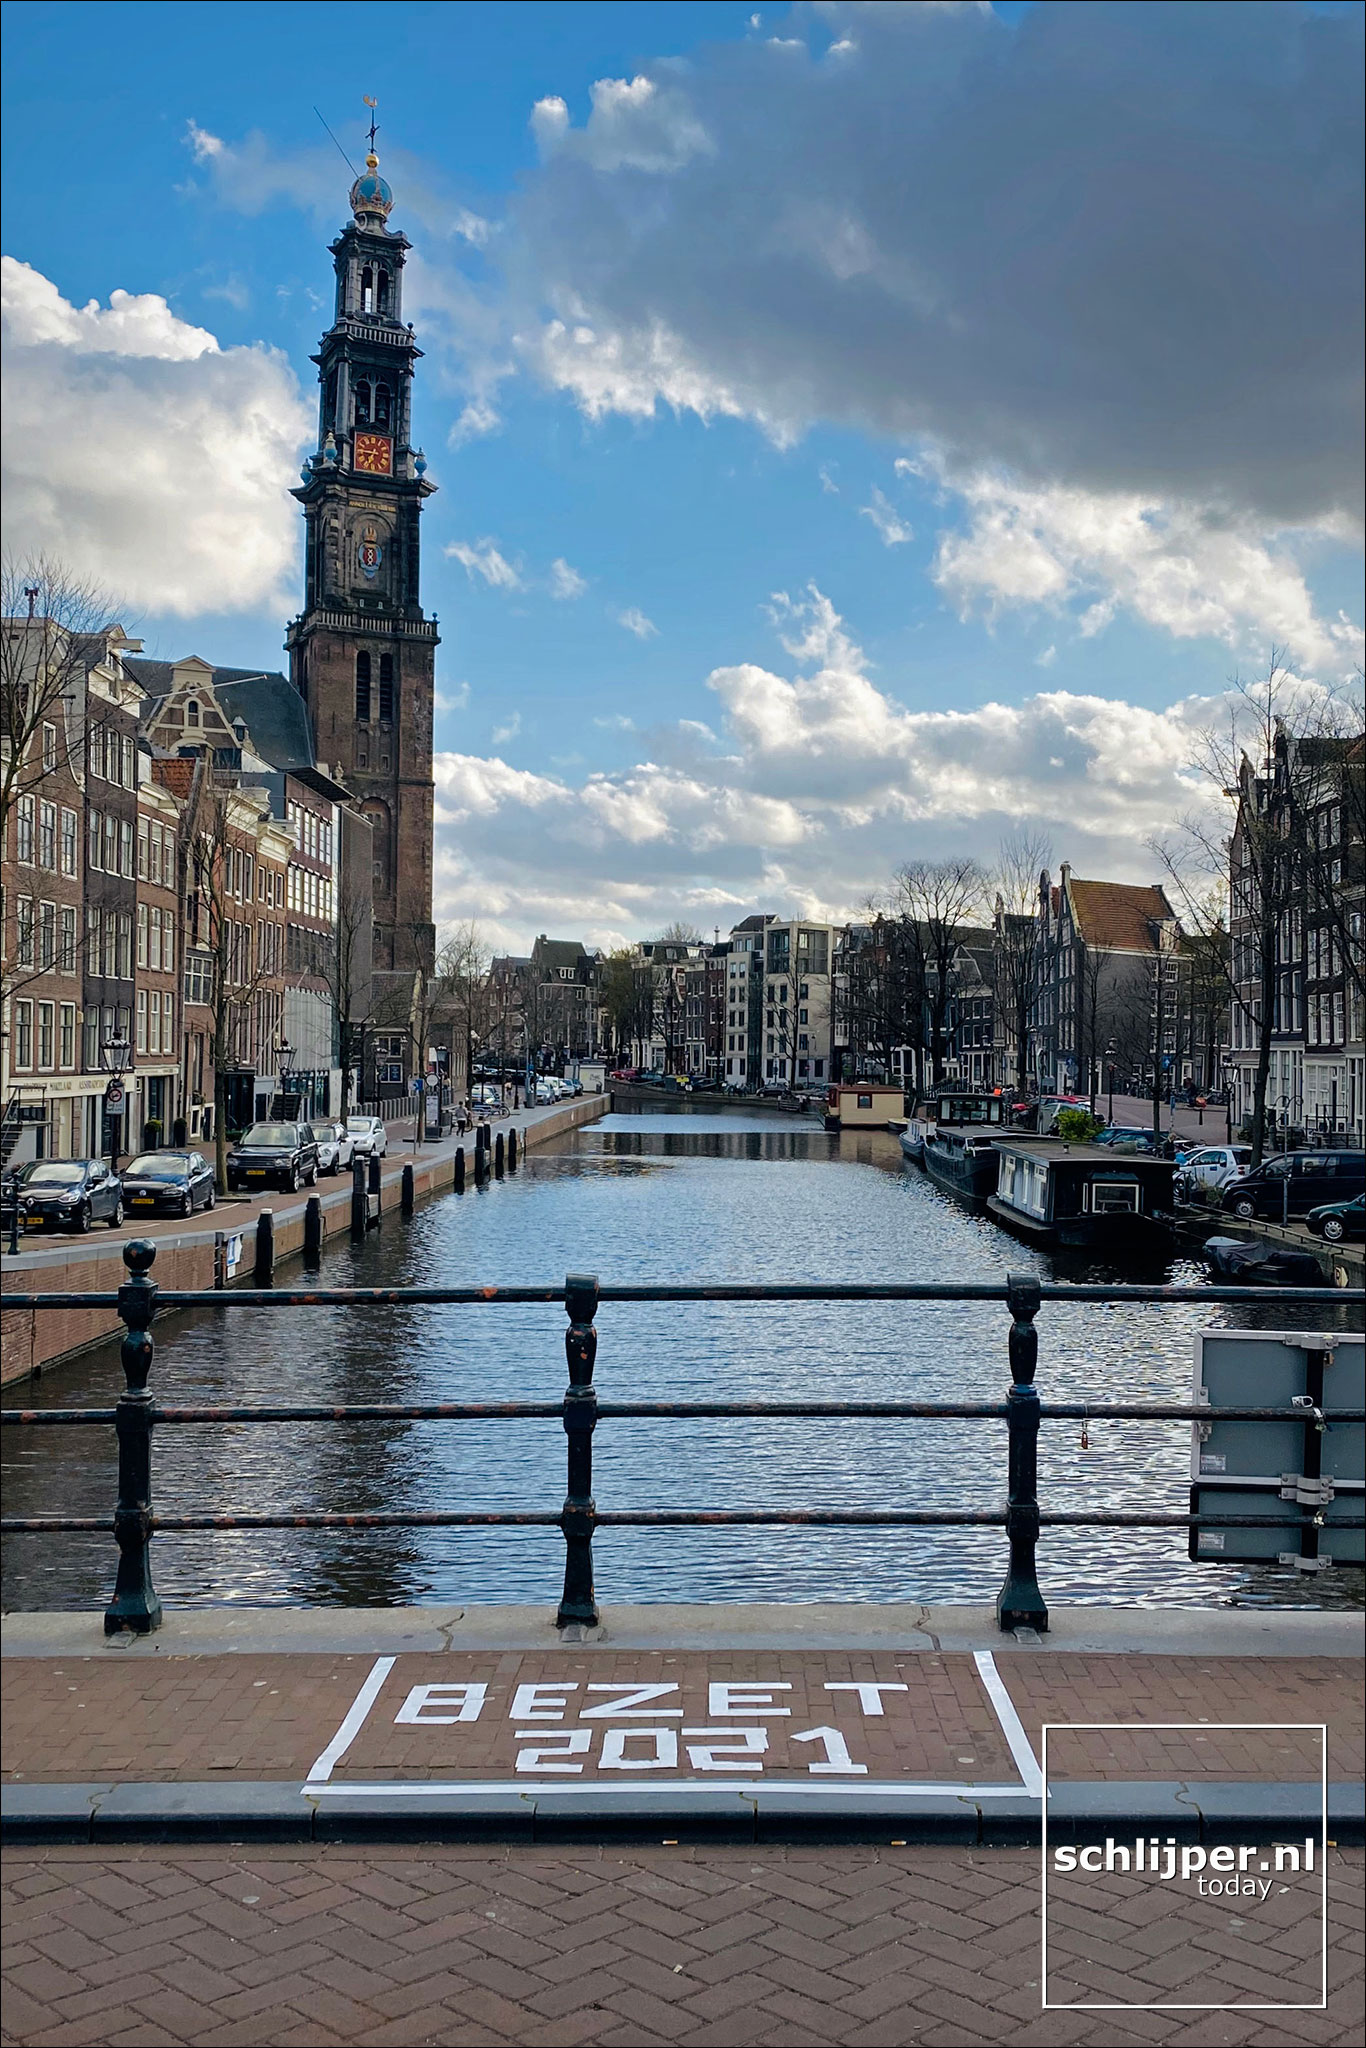 Nederland, Amsterdam, 3 april 2020